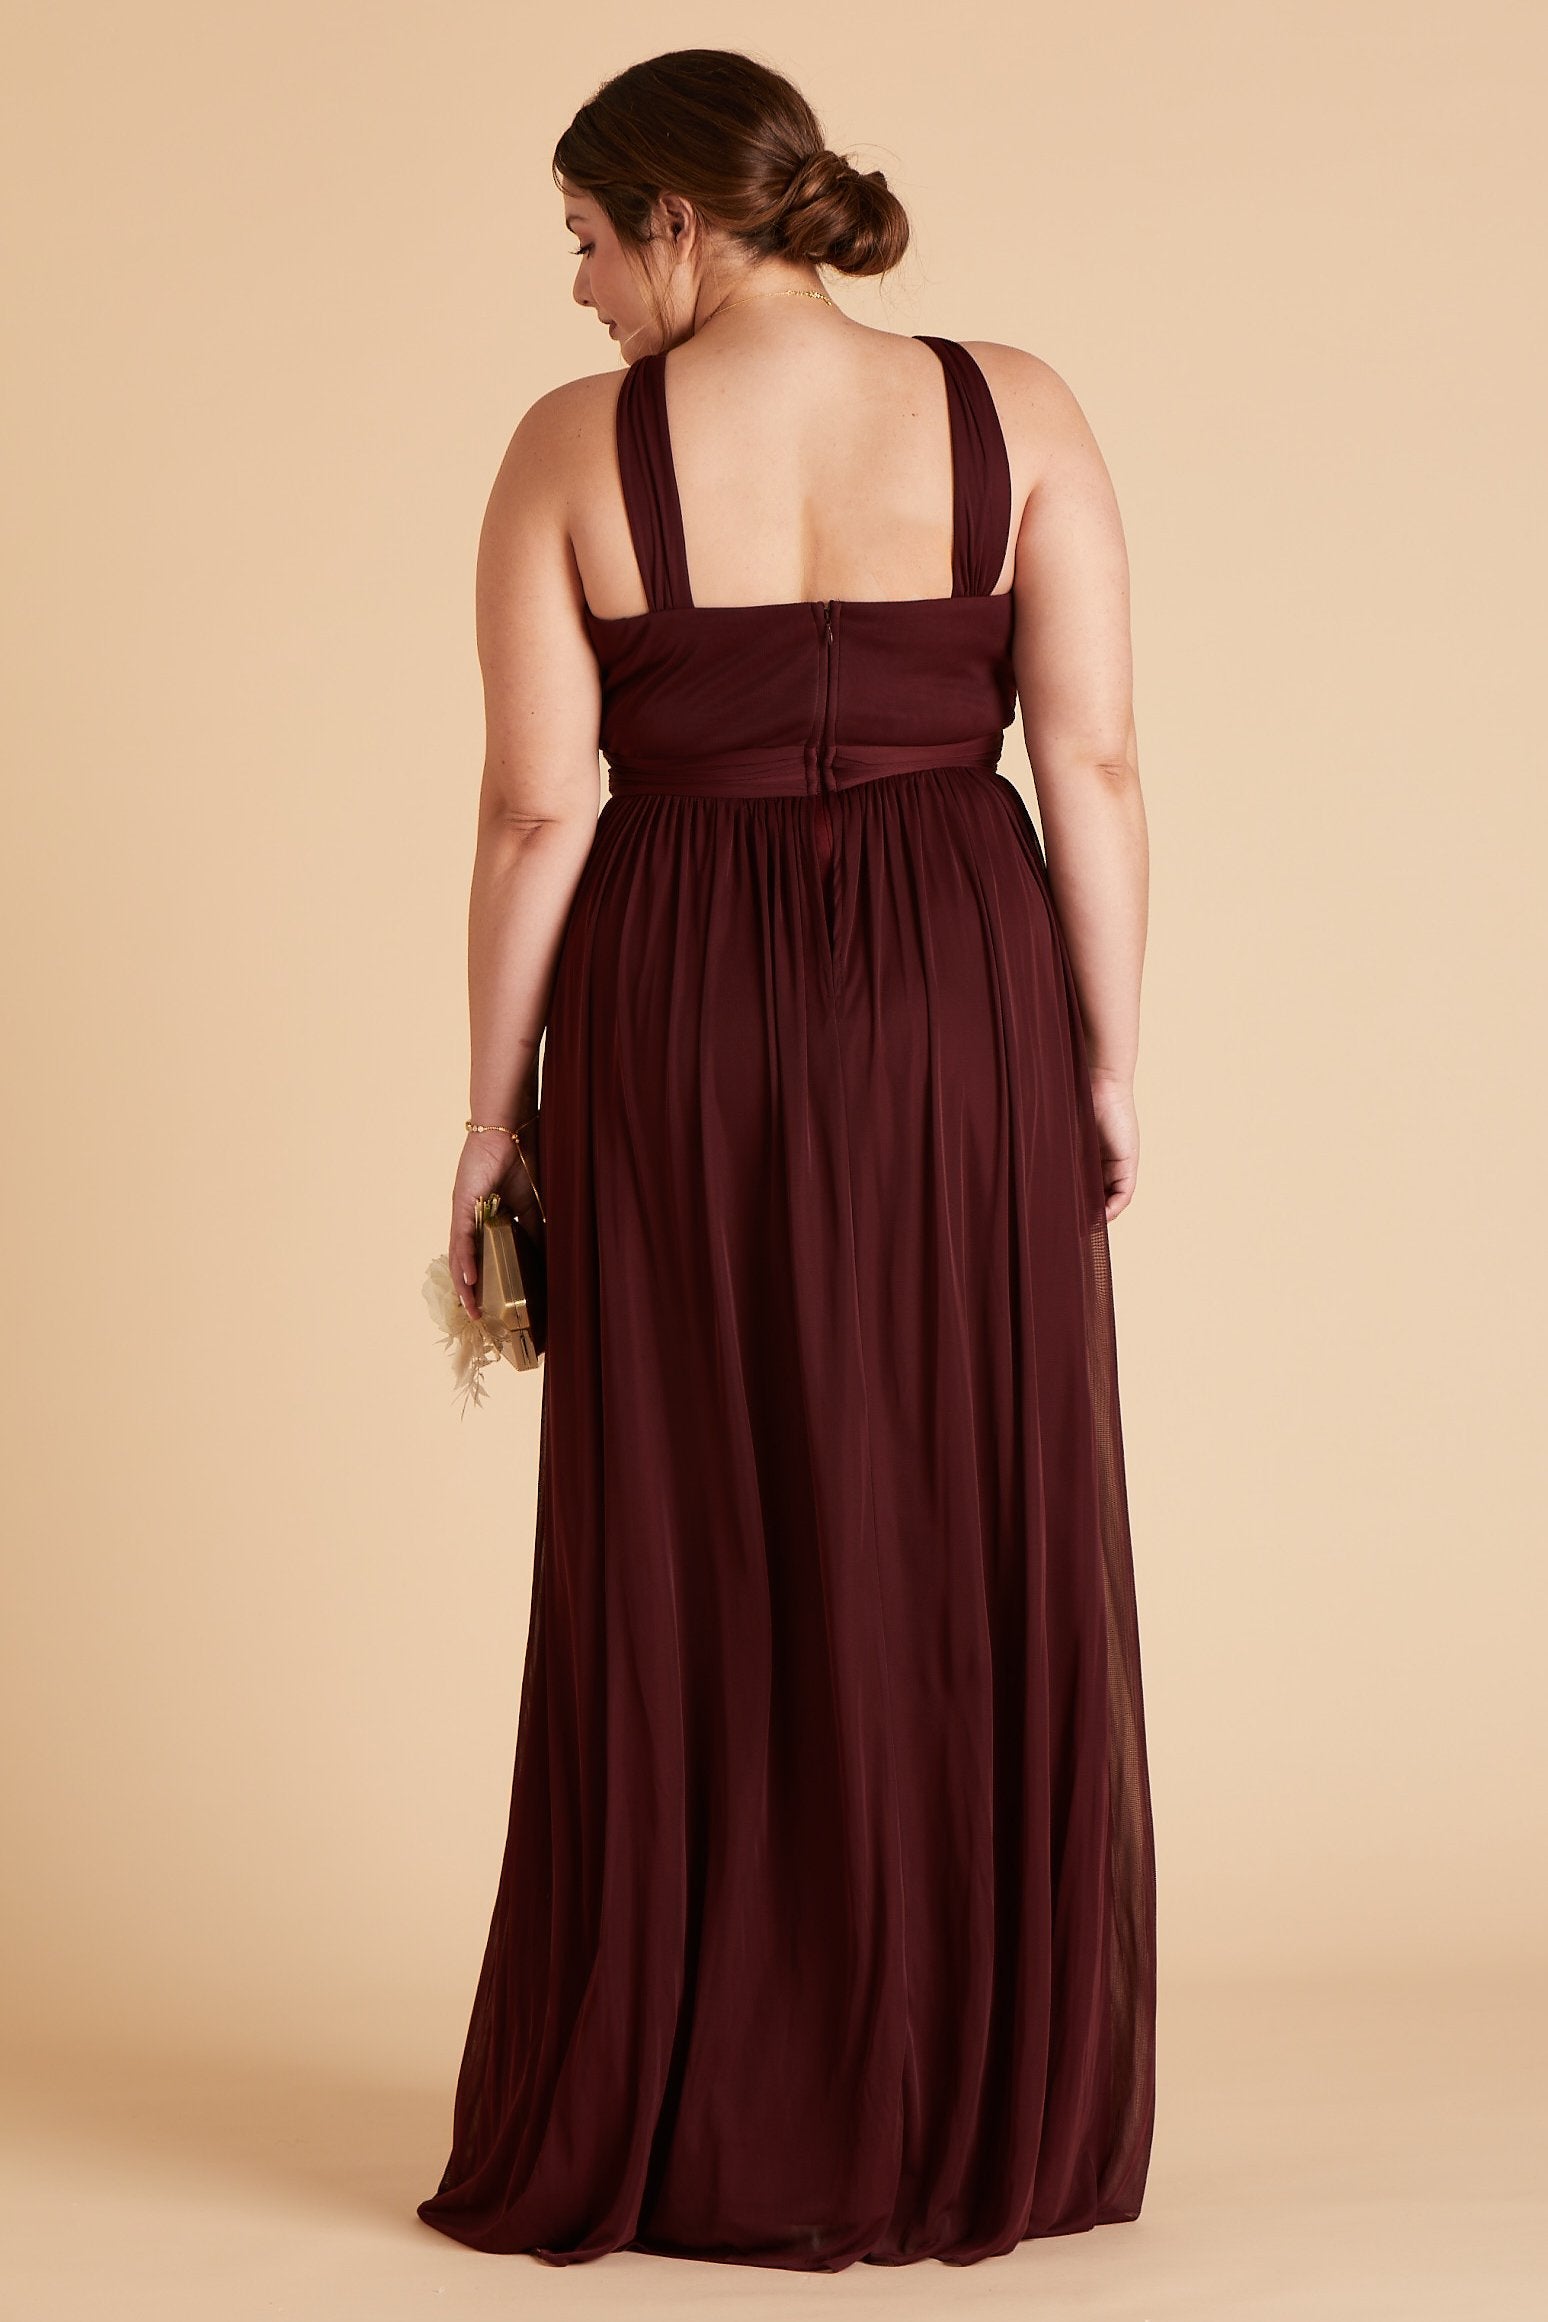 Kiko plus size bridesmaid dress in cabernet burgundy chiffon by Birdy Grey, back view